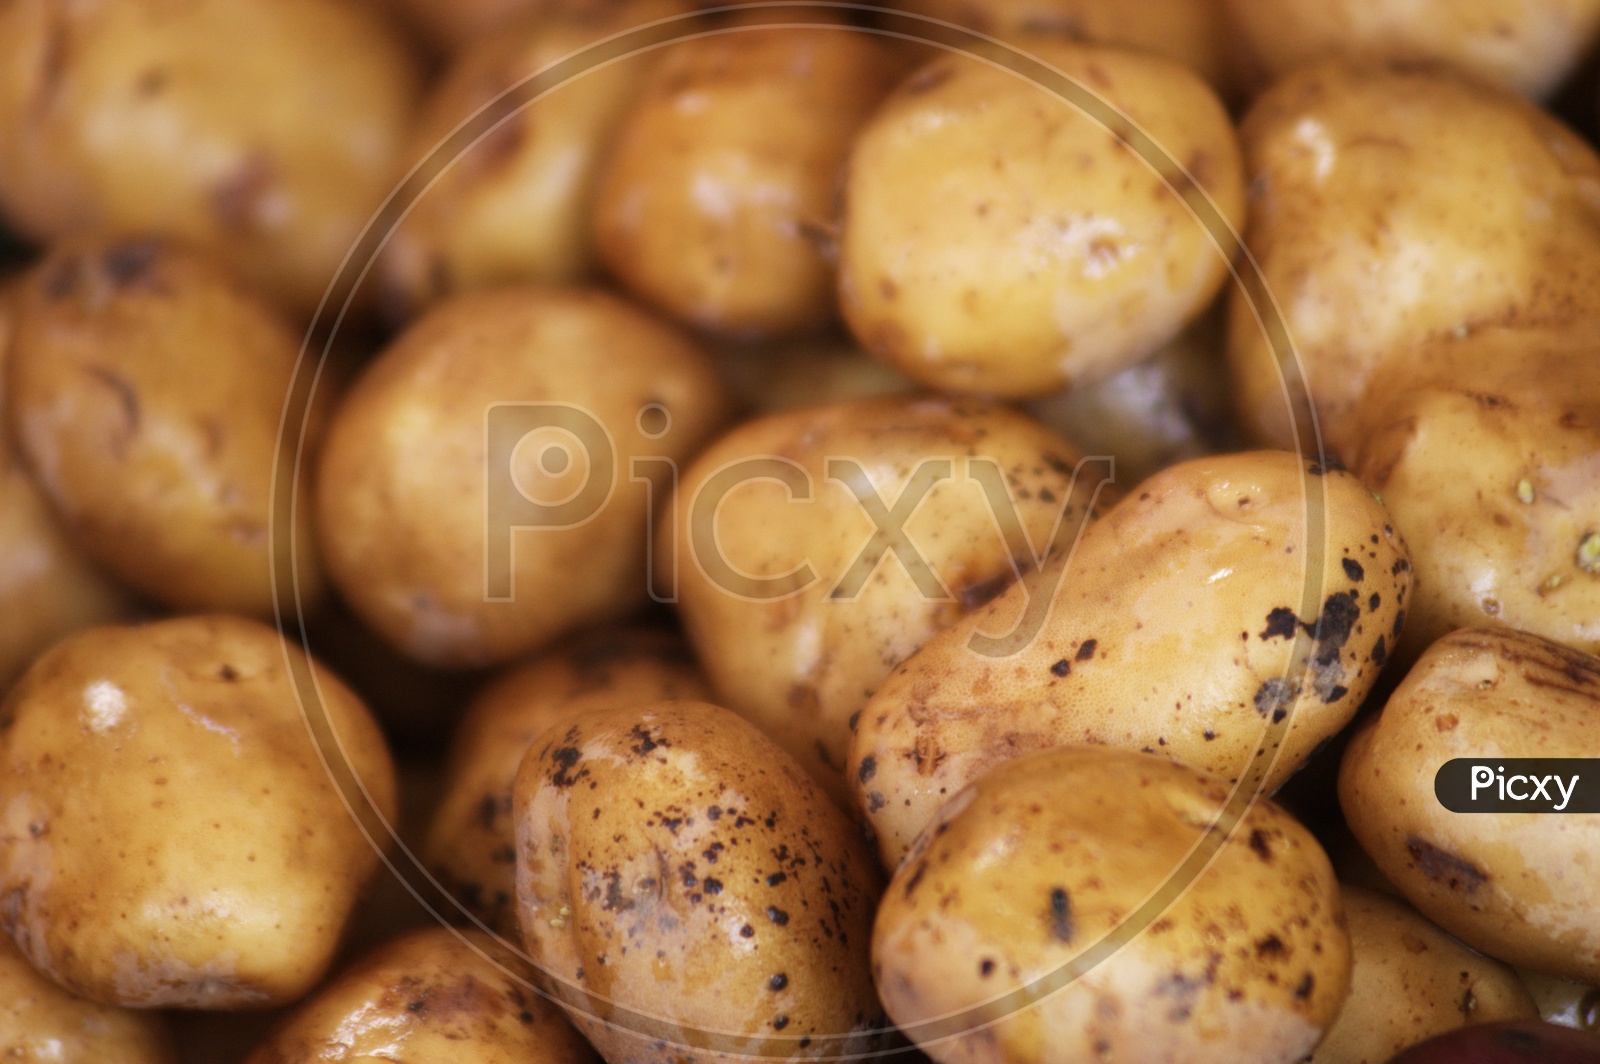 A set of potatoes